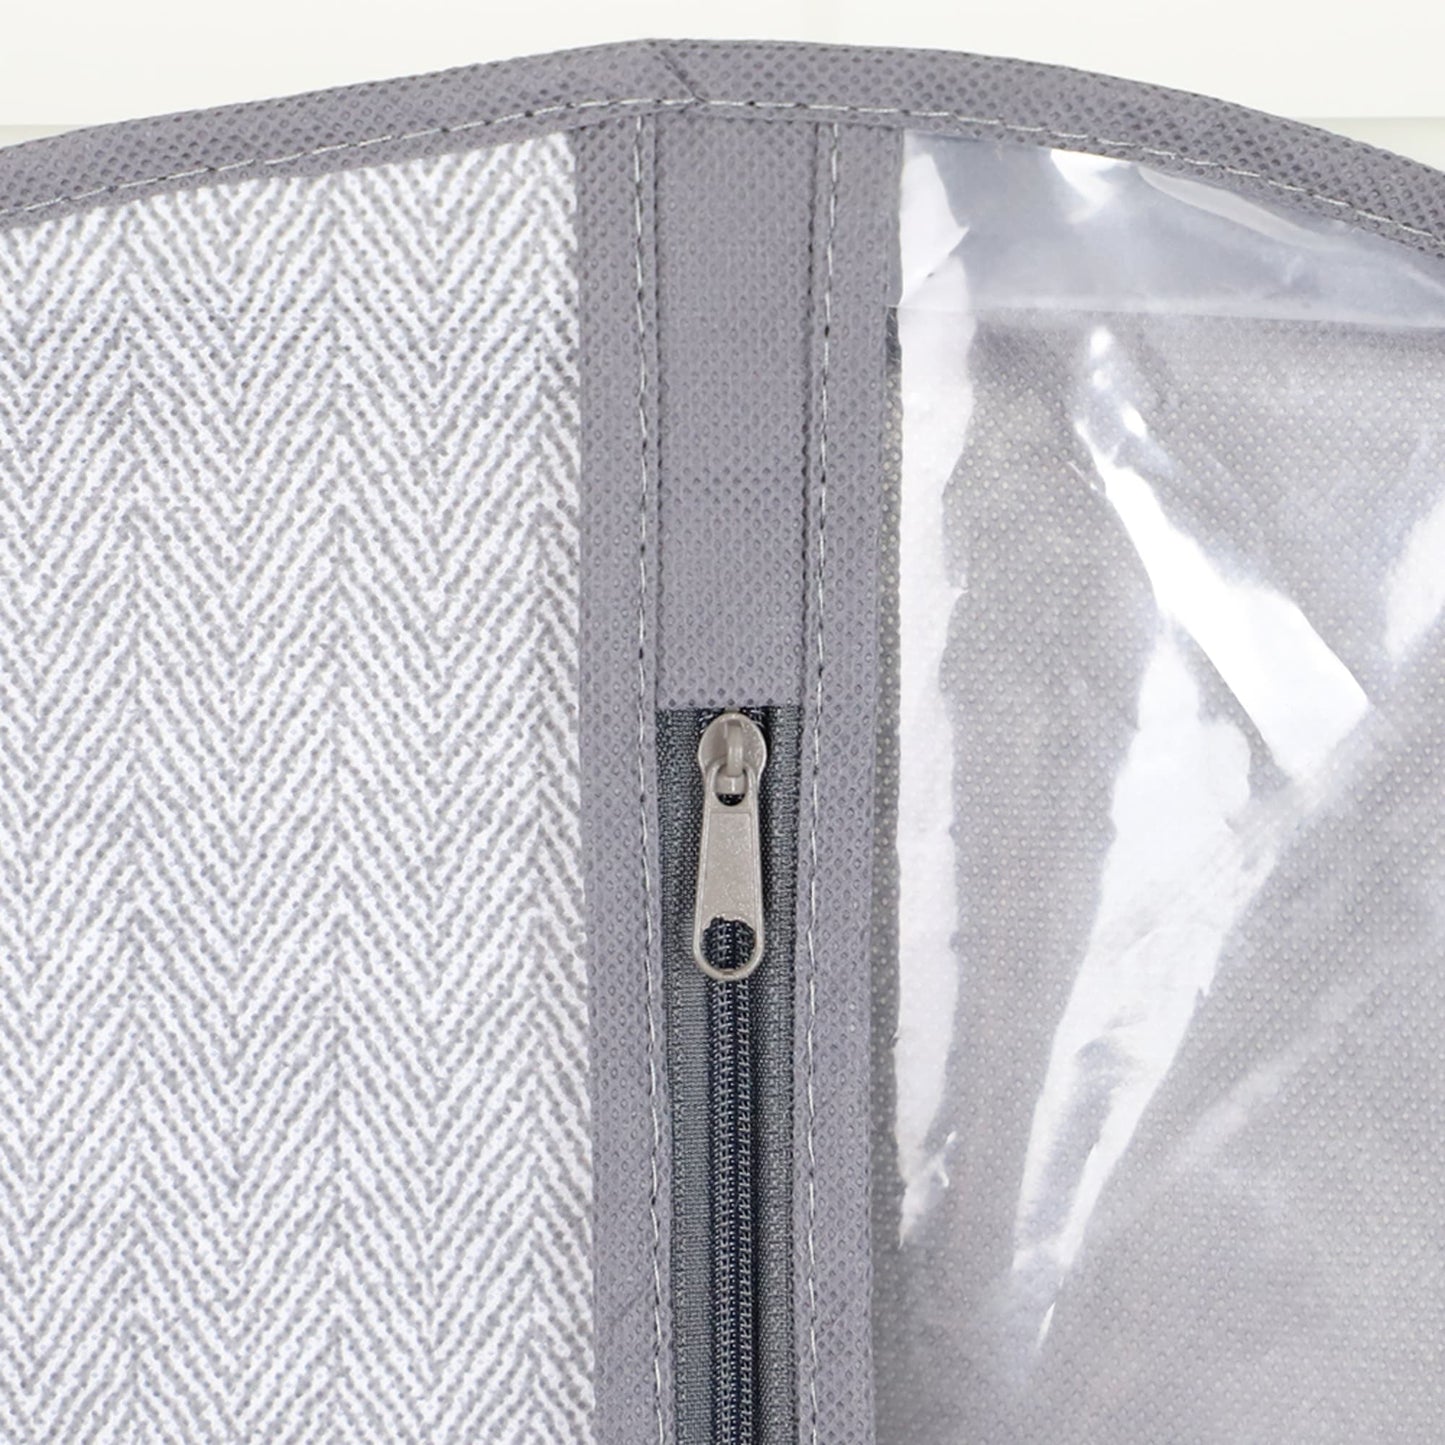 Basics Herringbone Non-Woven Dress Bag with Clear Plastic Panel, Grey